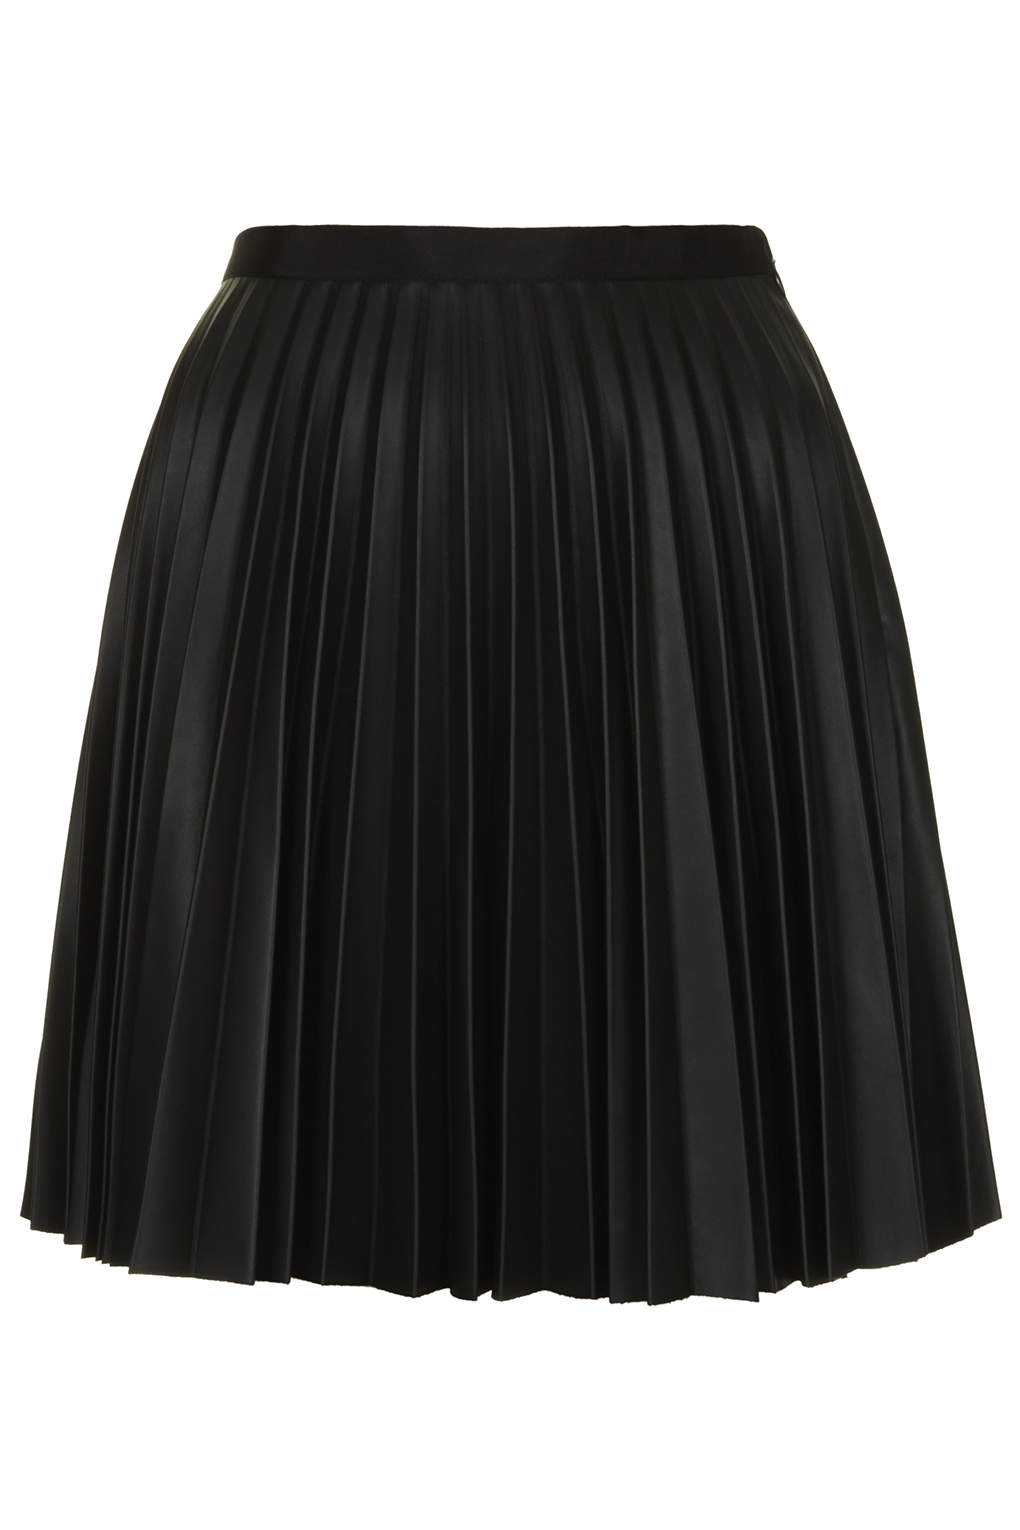 Topshop Petite Pu Pleated Mini Skirt in Black | Lyst